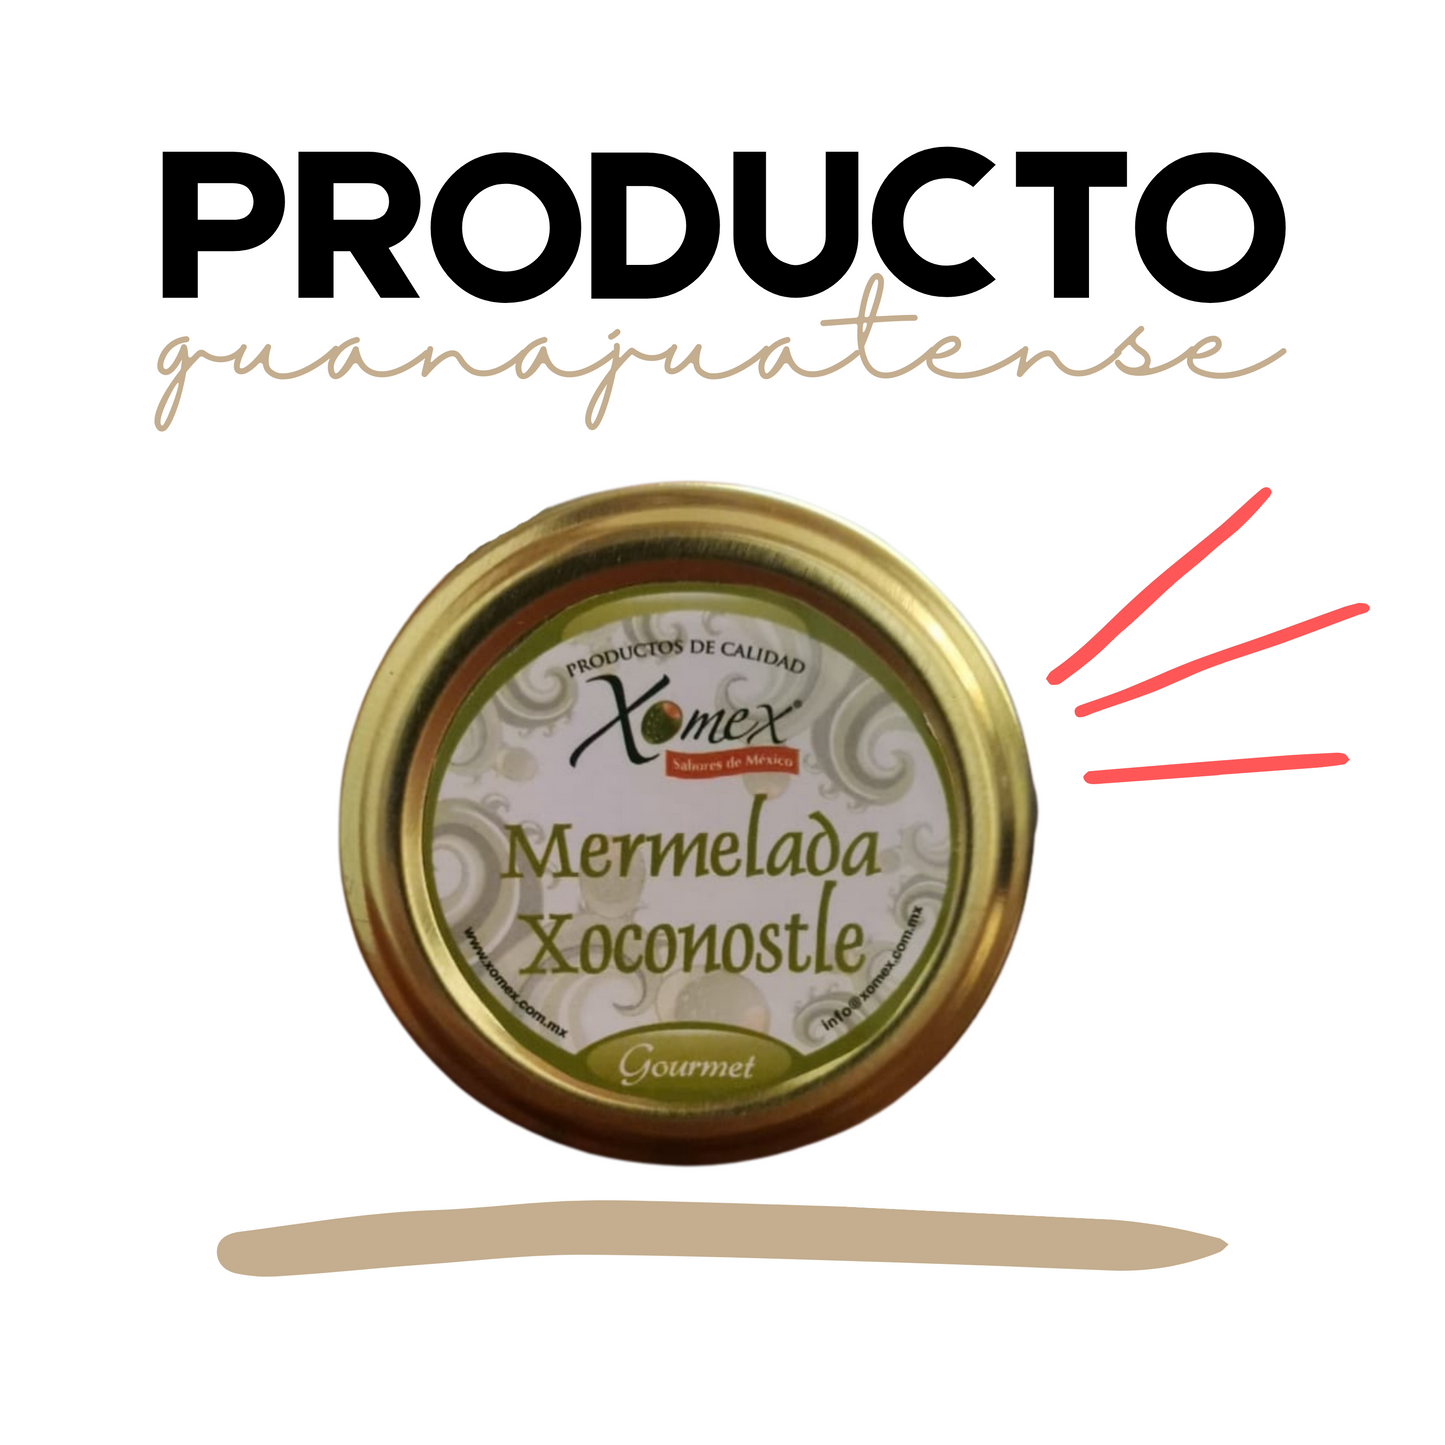 Mermelada de Xoconostle | Xoconostle Fruit | 100% natural | 300g | Mexpofood